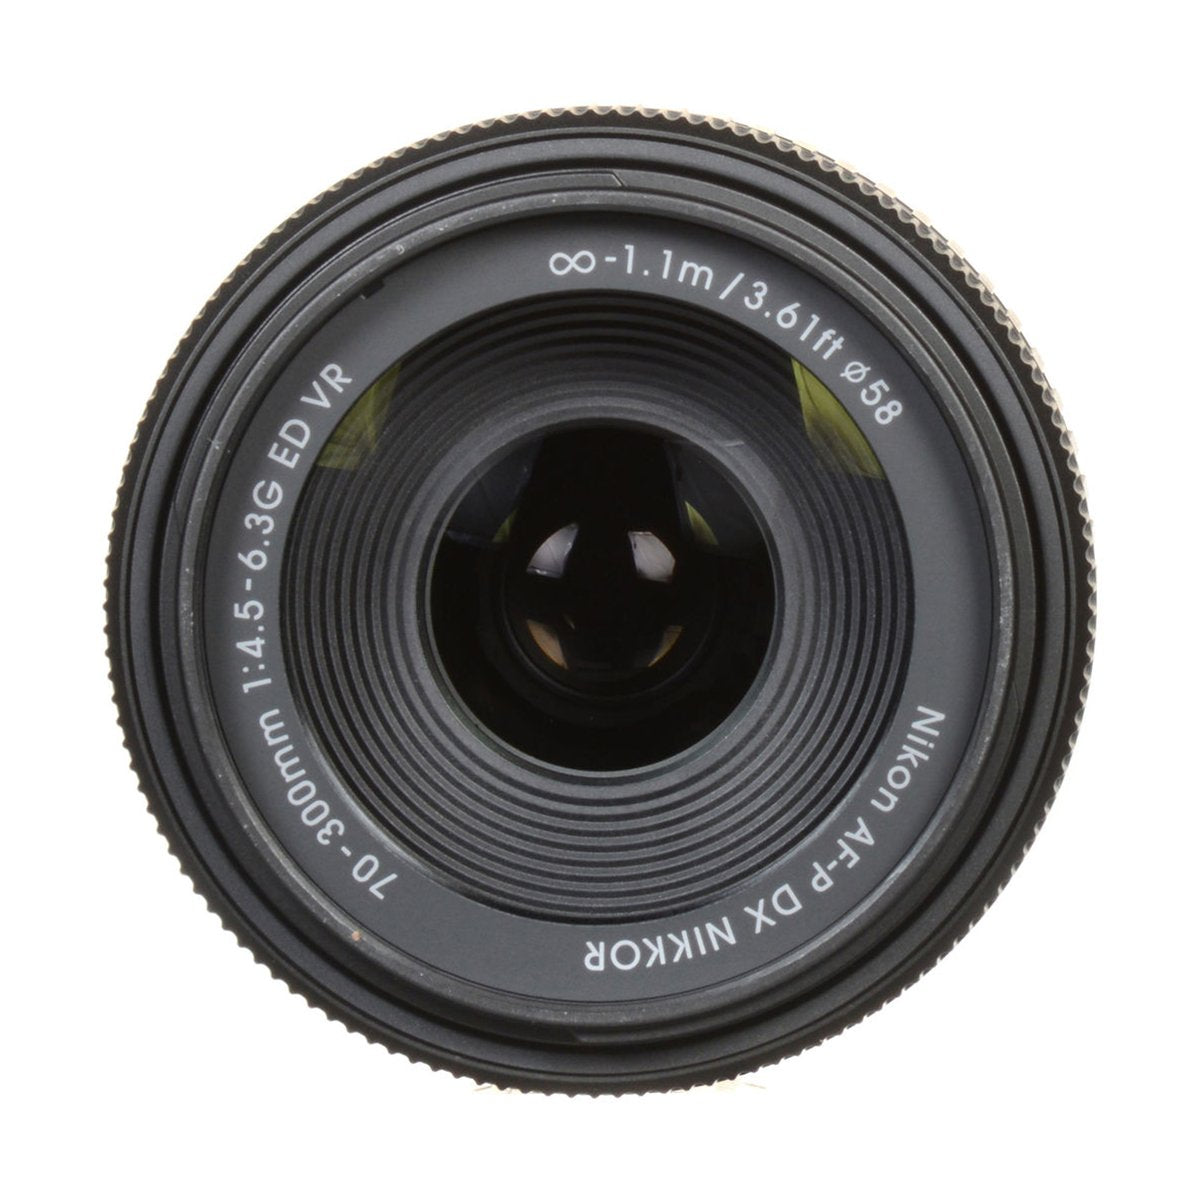 Nikon D7500 Dual Lens Camera Kit w/18-55mm VR II & 70-300mm VR Lens